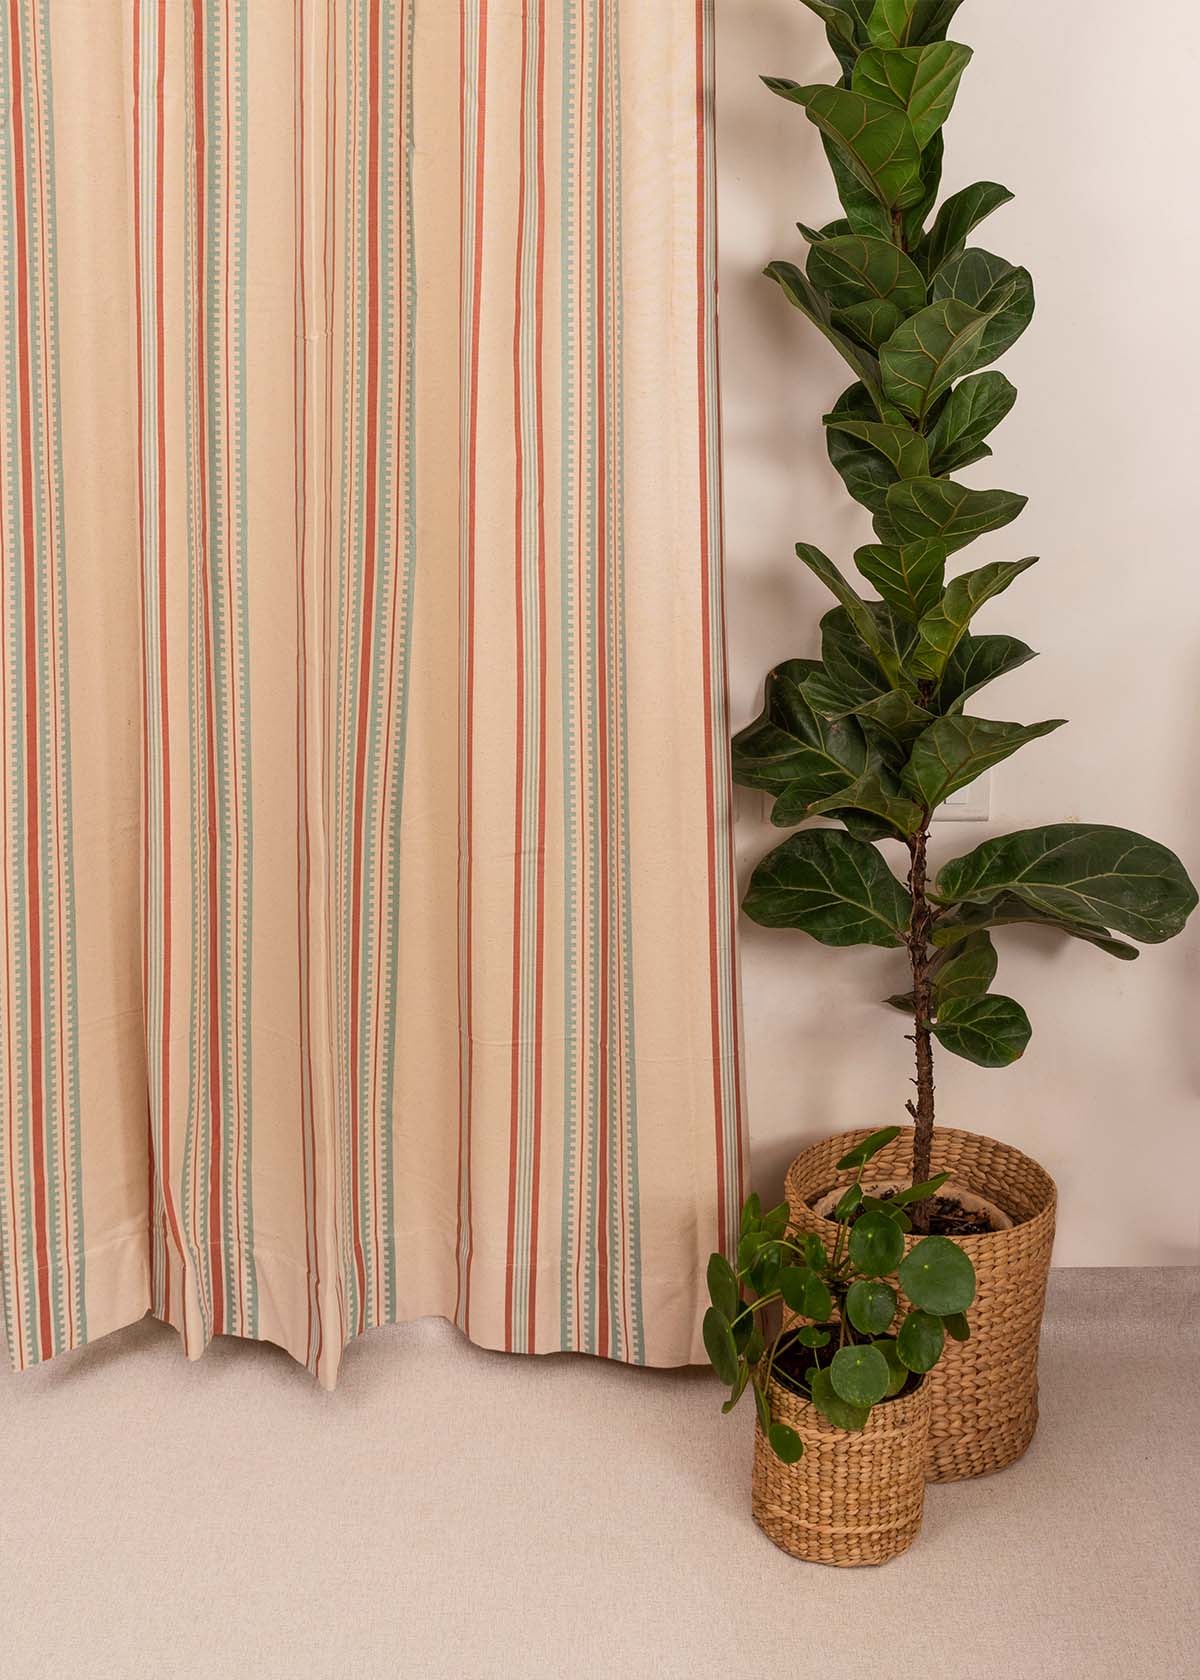 Roman Stripes Printed Cotton Curtain - Multicolor - Single